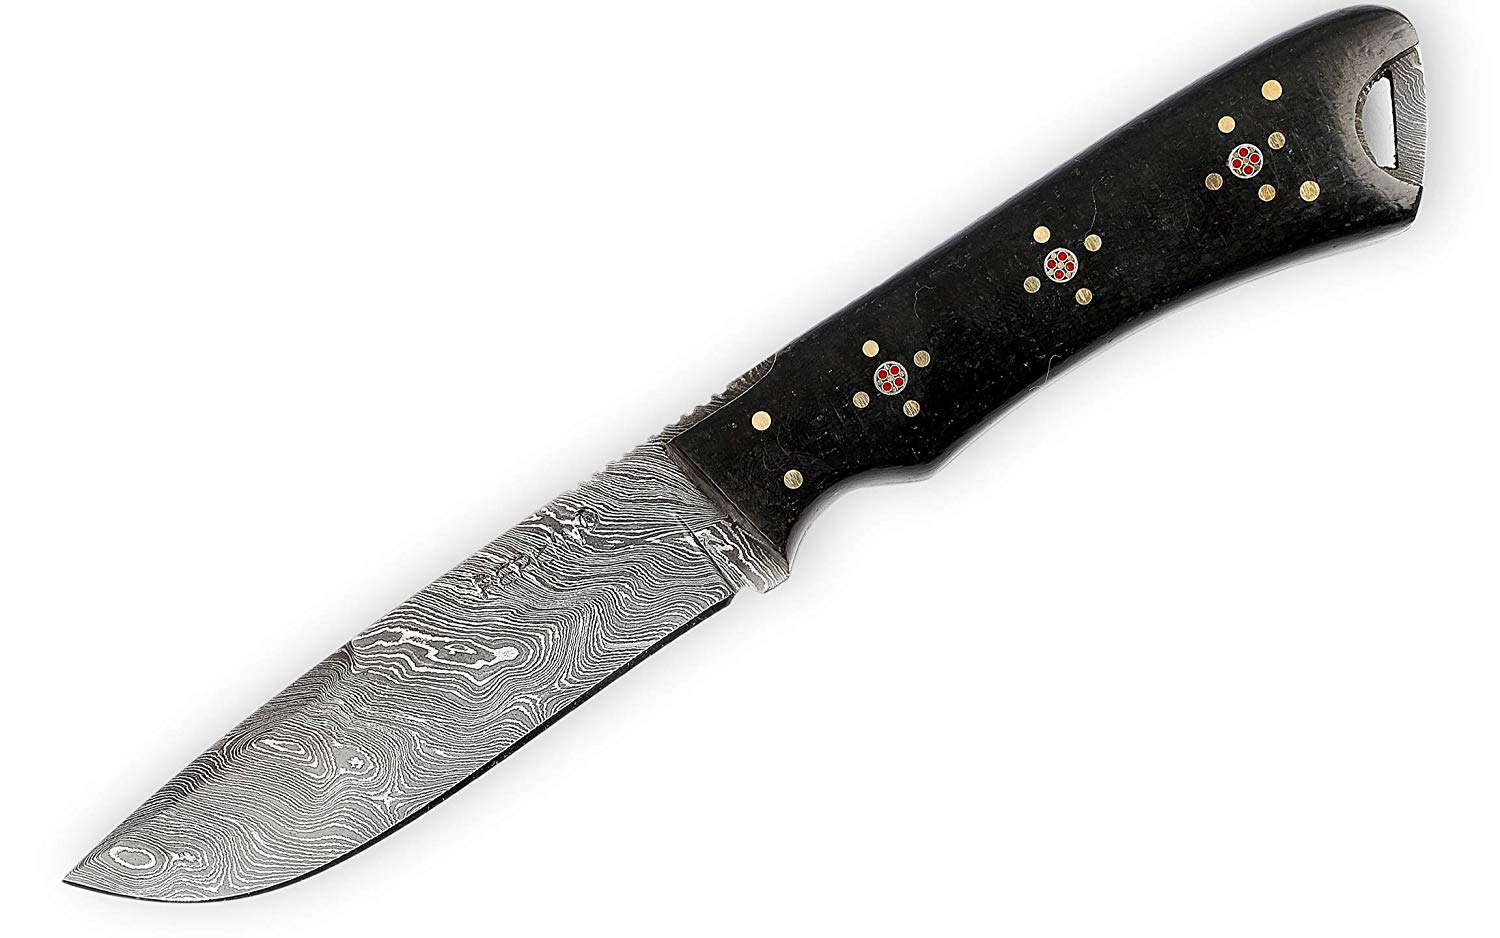 Razor Sharp Steel Blade Hunting Knife - 9.5 inches